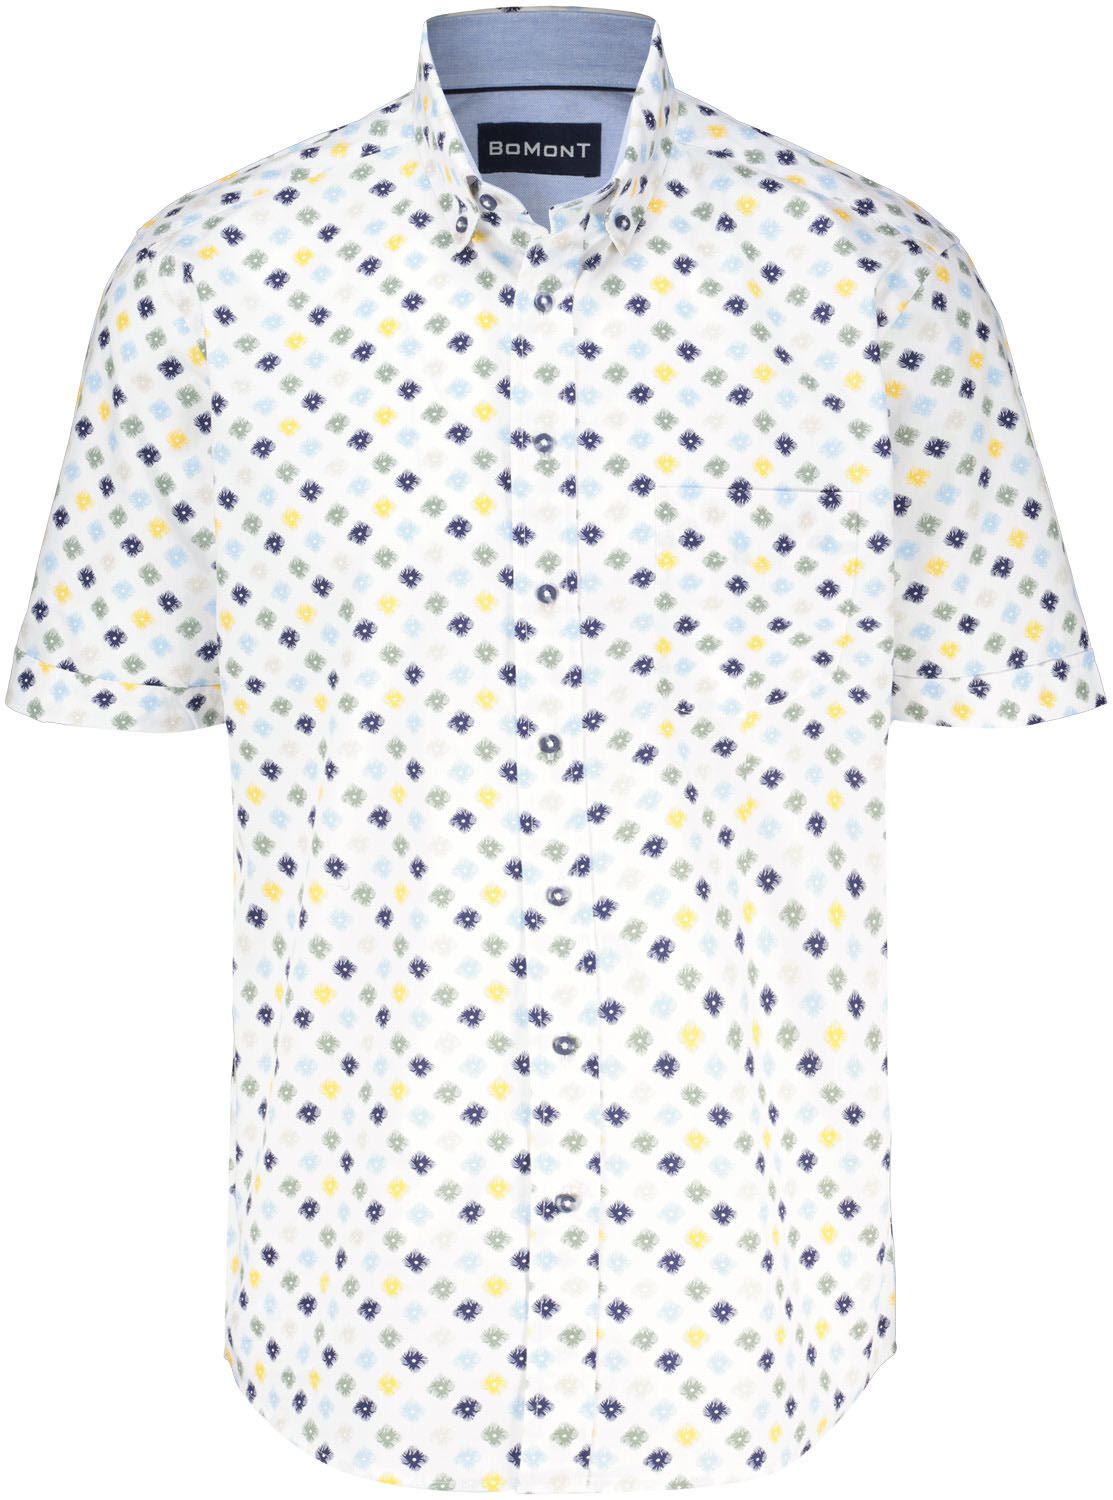 Bomont Overhemd Multi